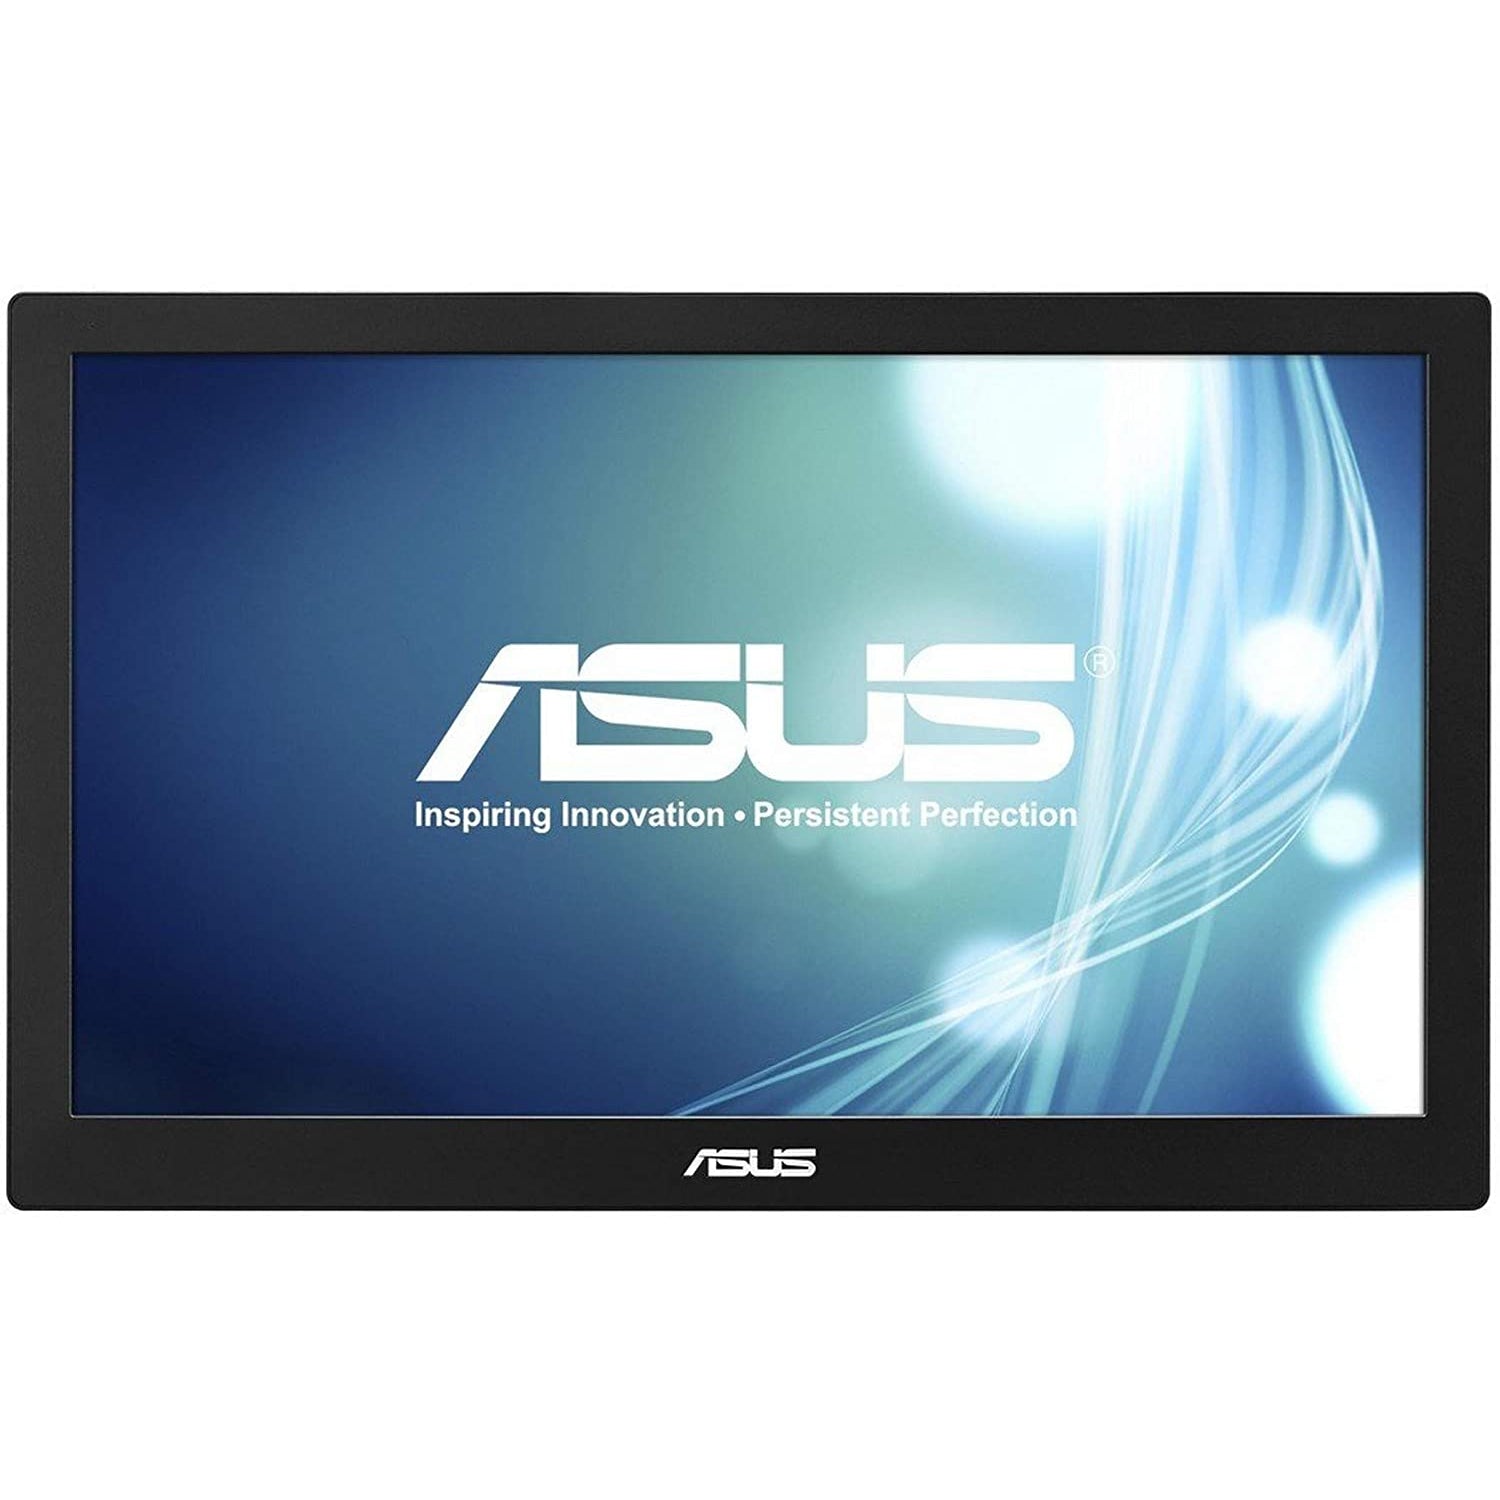 Asus MB168B 15.6in Portable USB Monitor, Black